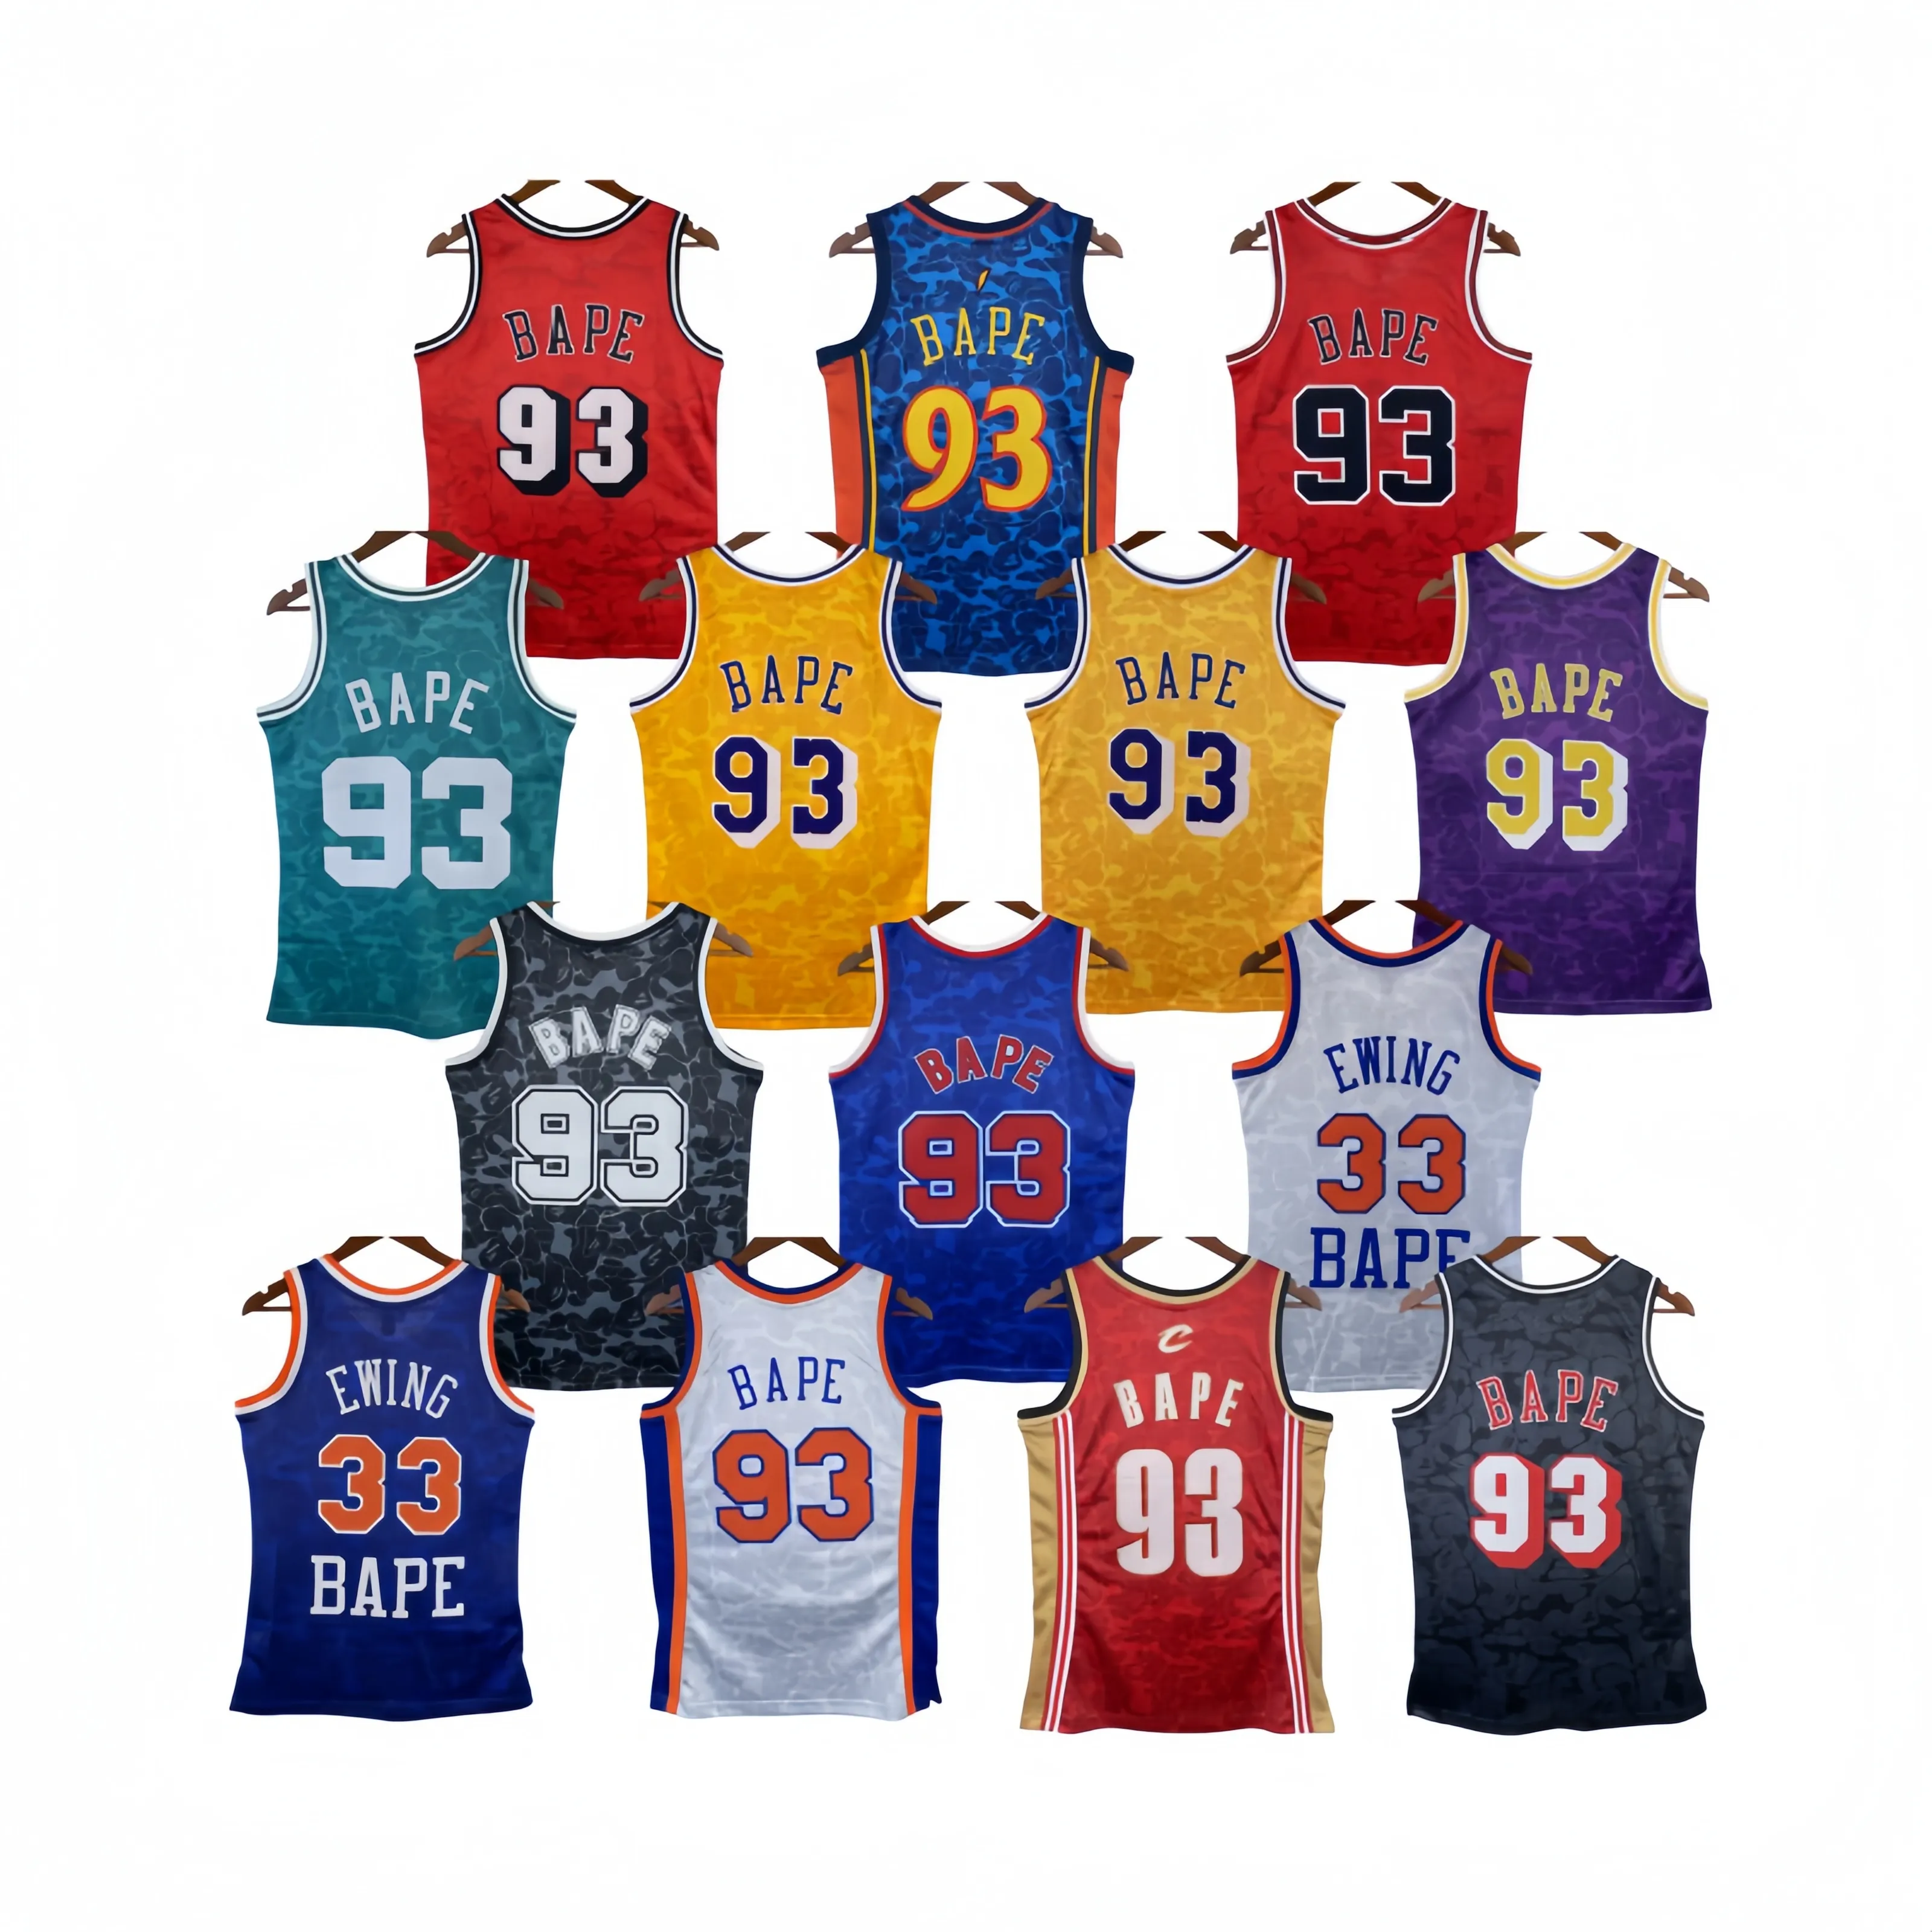 Retro-Basketball uniformen der Marke Co. Schnellt rockn endes besticktes Basketball trikot für alle Basketball clubs in den USA